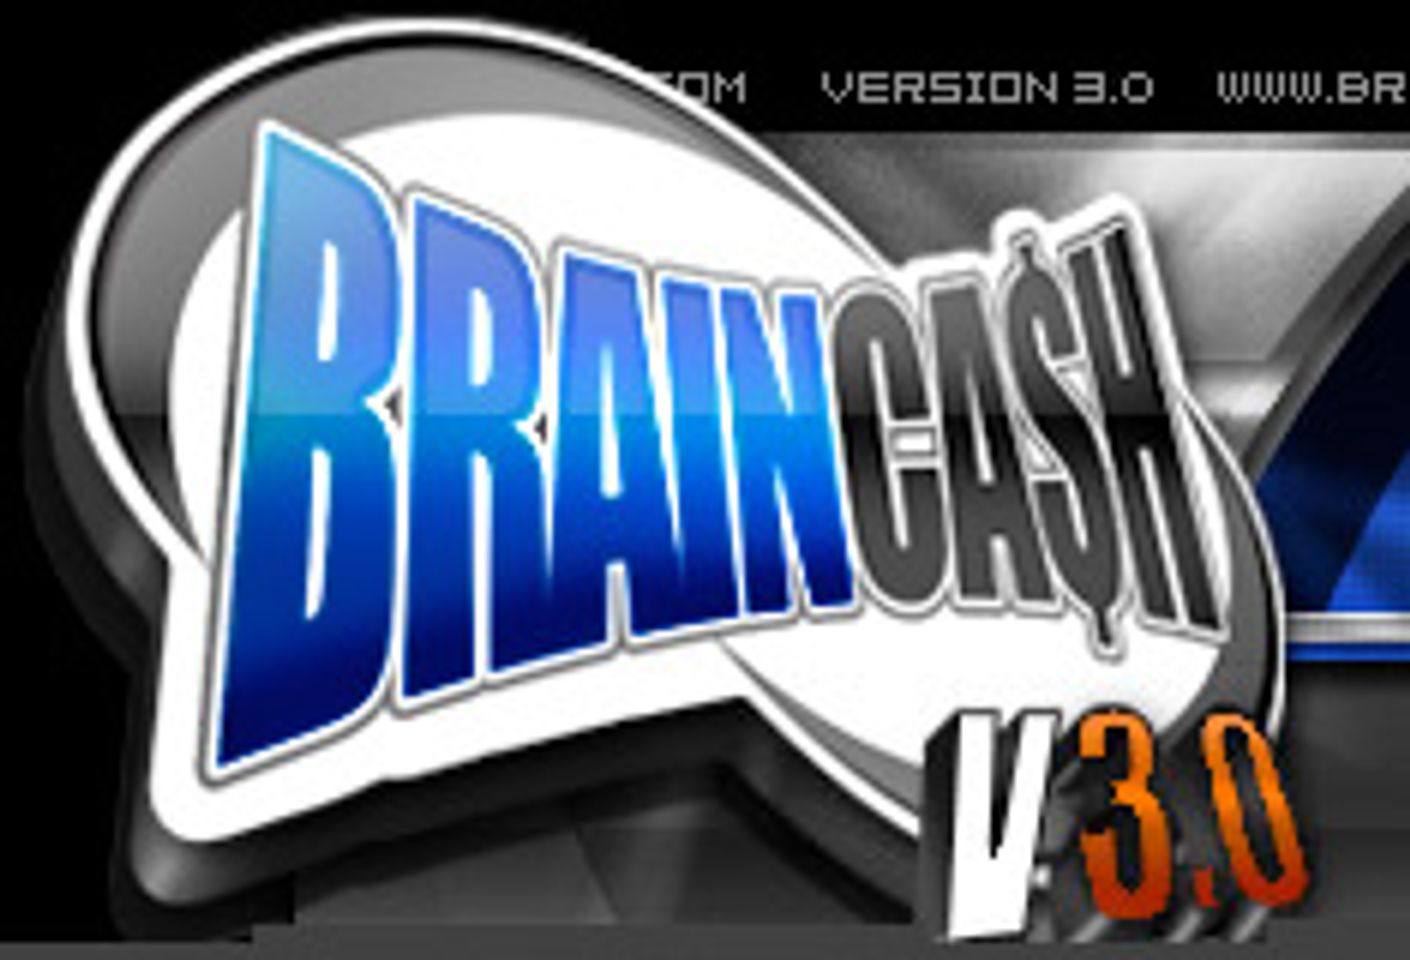 BrainCash Now Offering $40 PPT